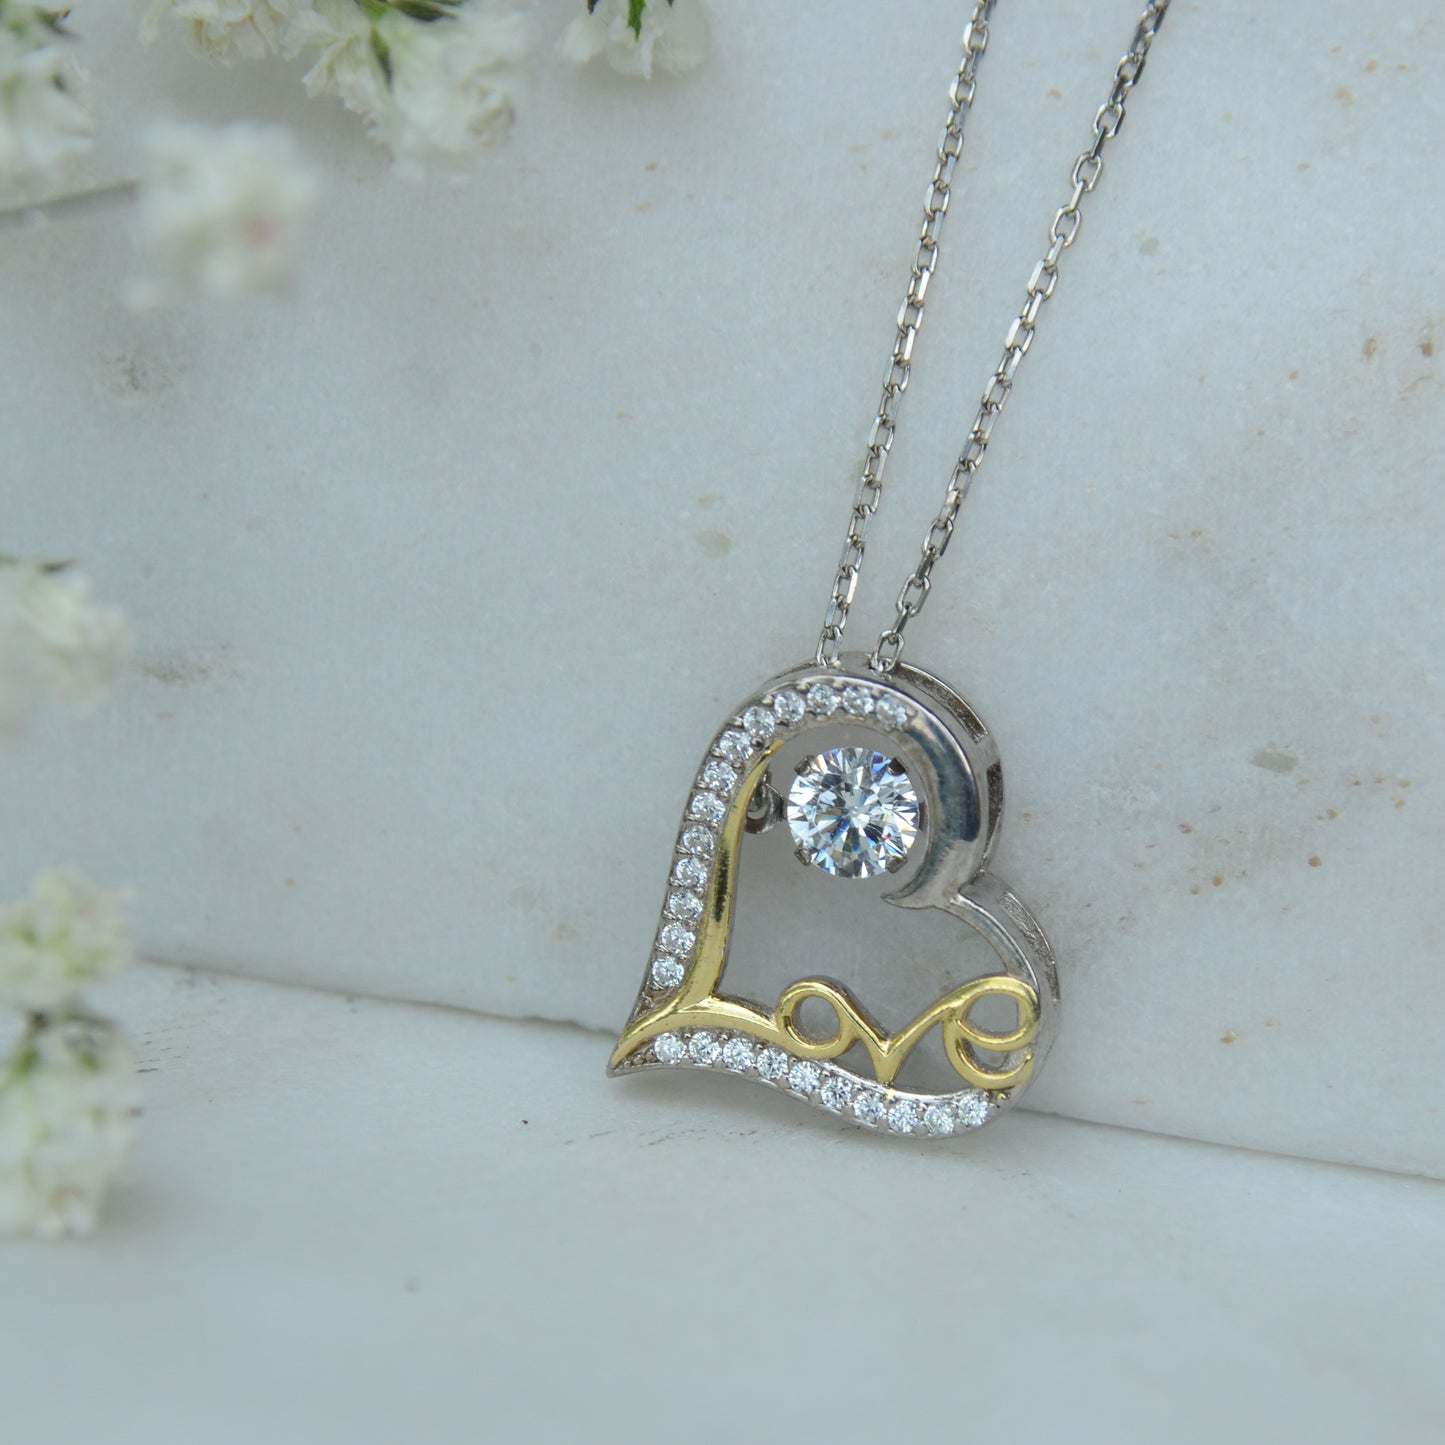 Boyfriend's Mom Gift - Heart Necklace